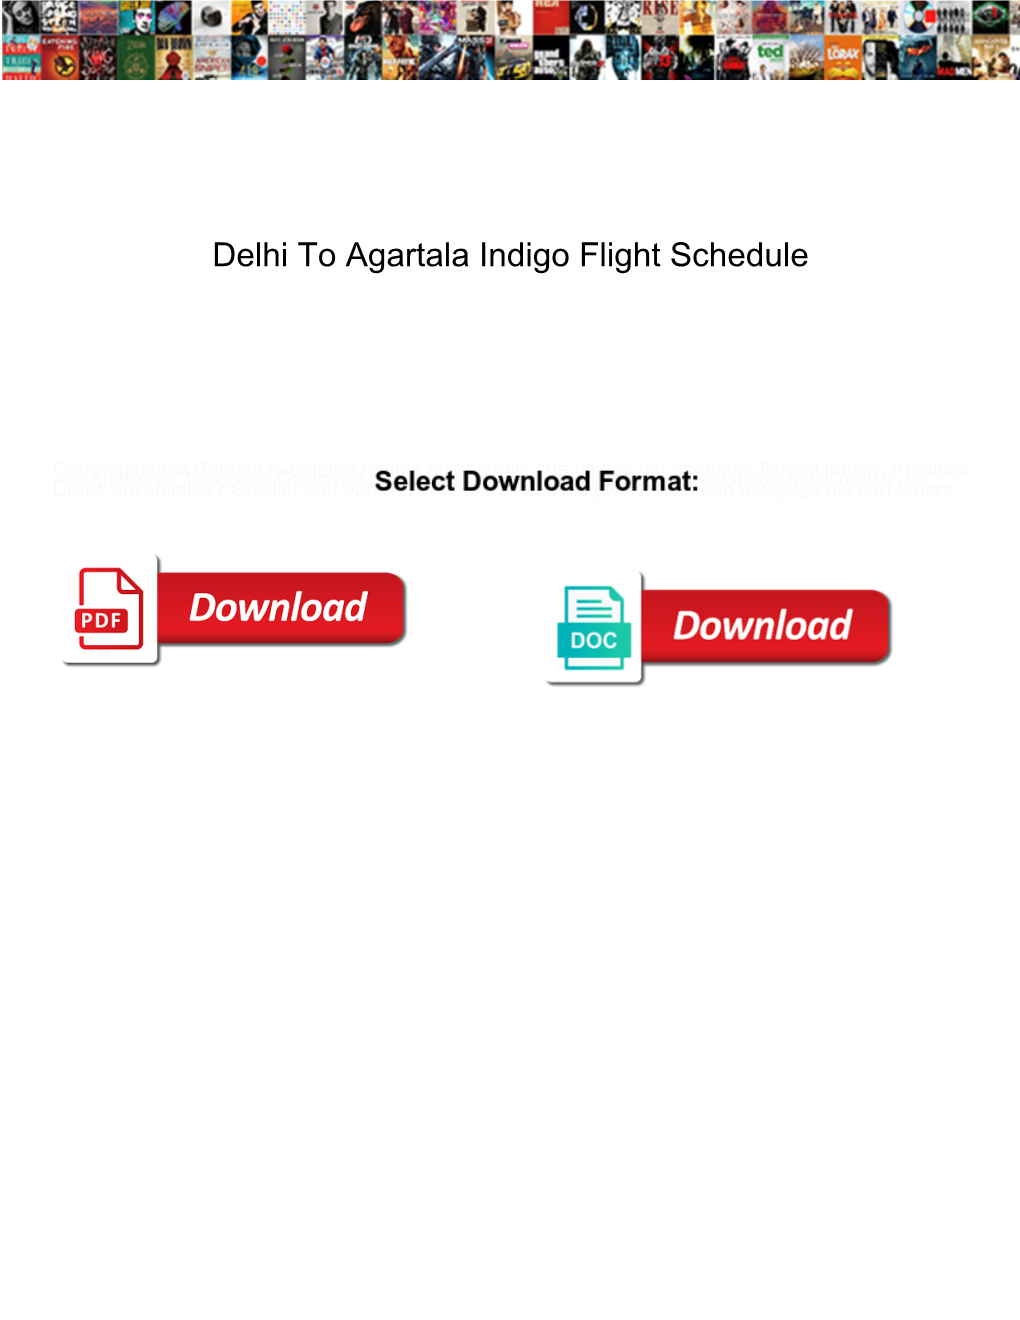 Delhi to Agartala Indigo Flight Schedule